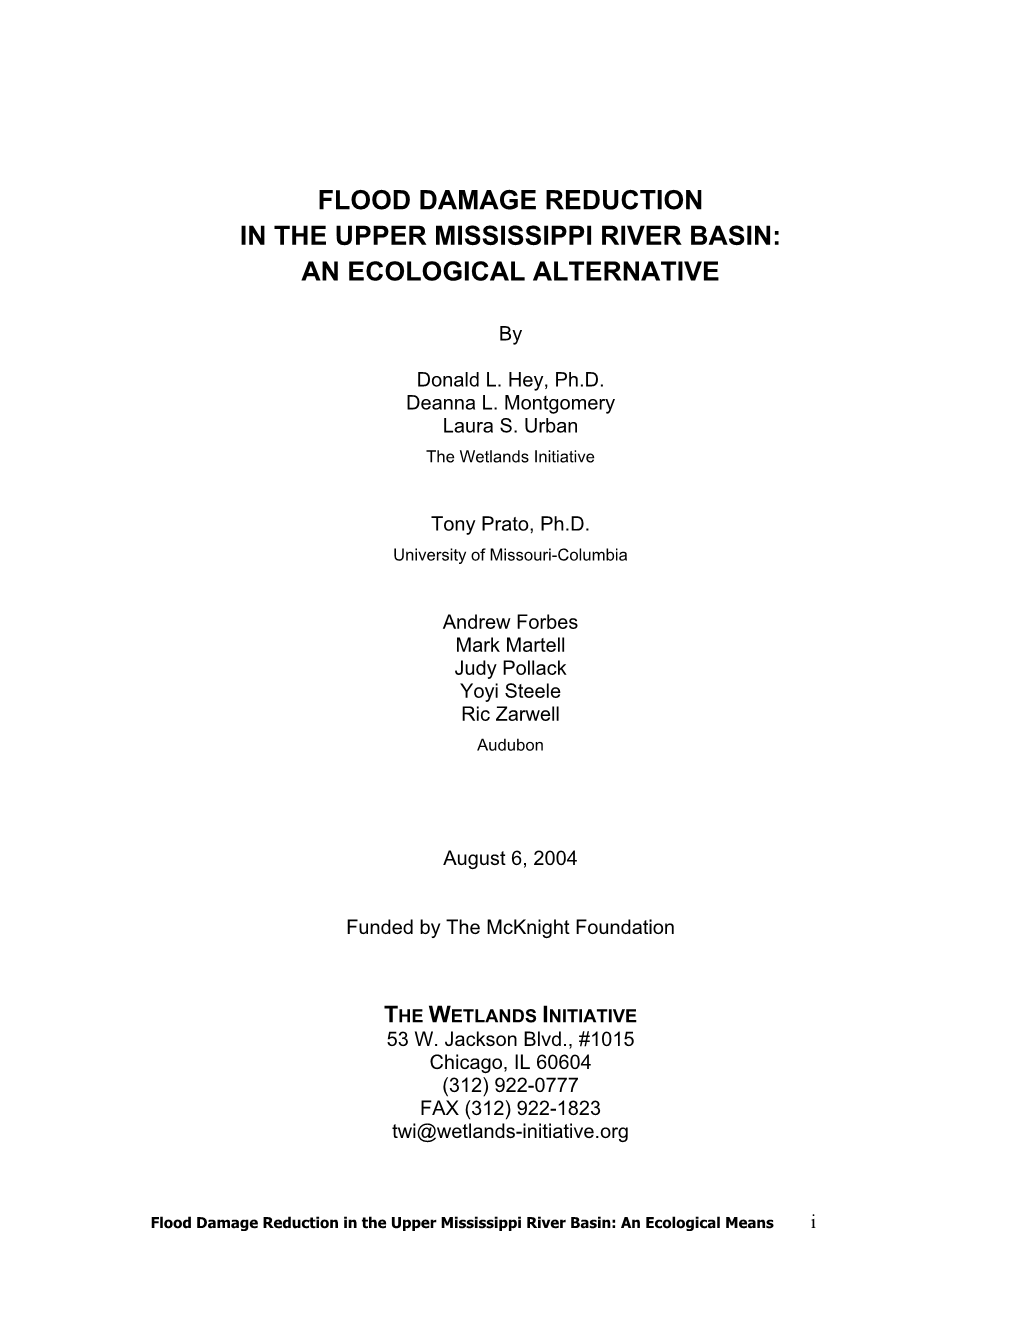 Flood Damage Reduction in the Upper Mississippi River Basin: an Ecological Alternative